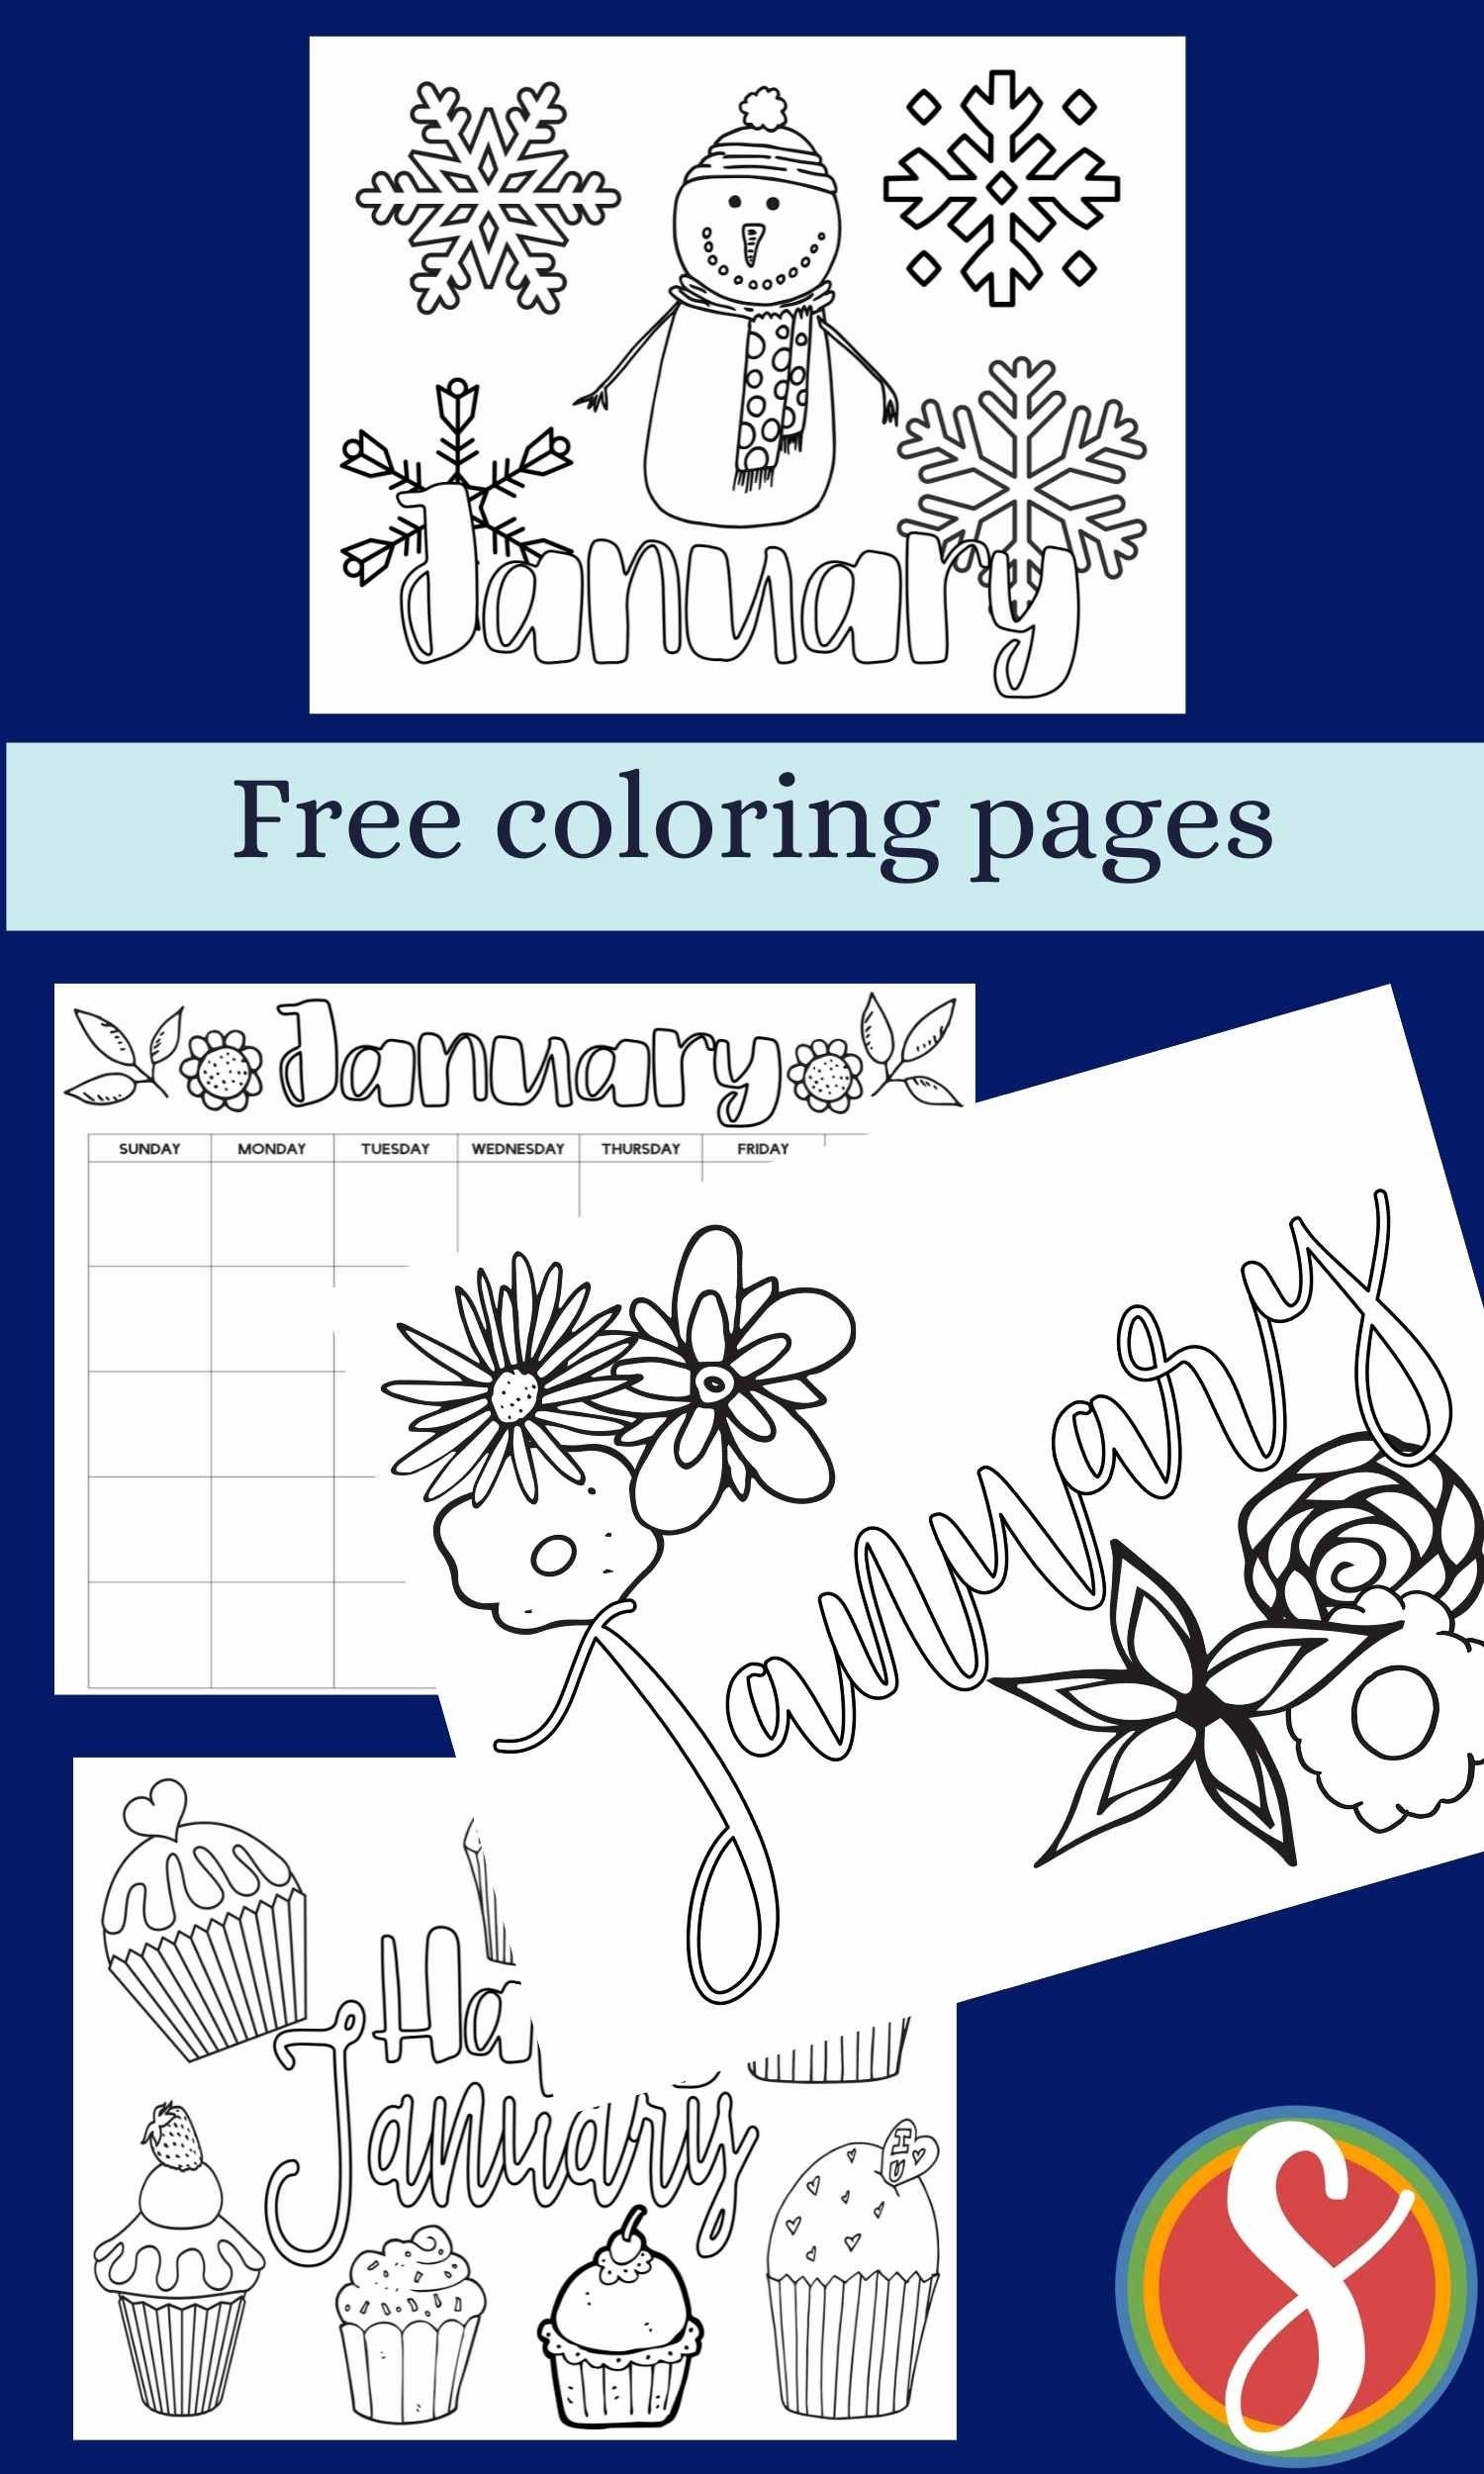 January coloring pages â stevie doodles